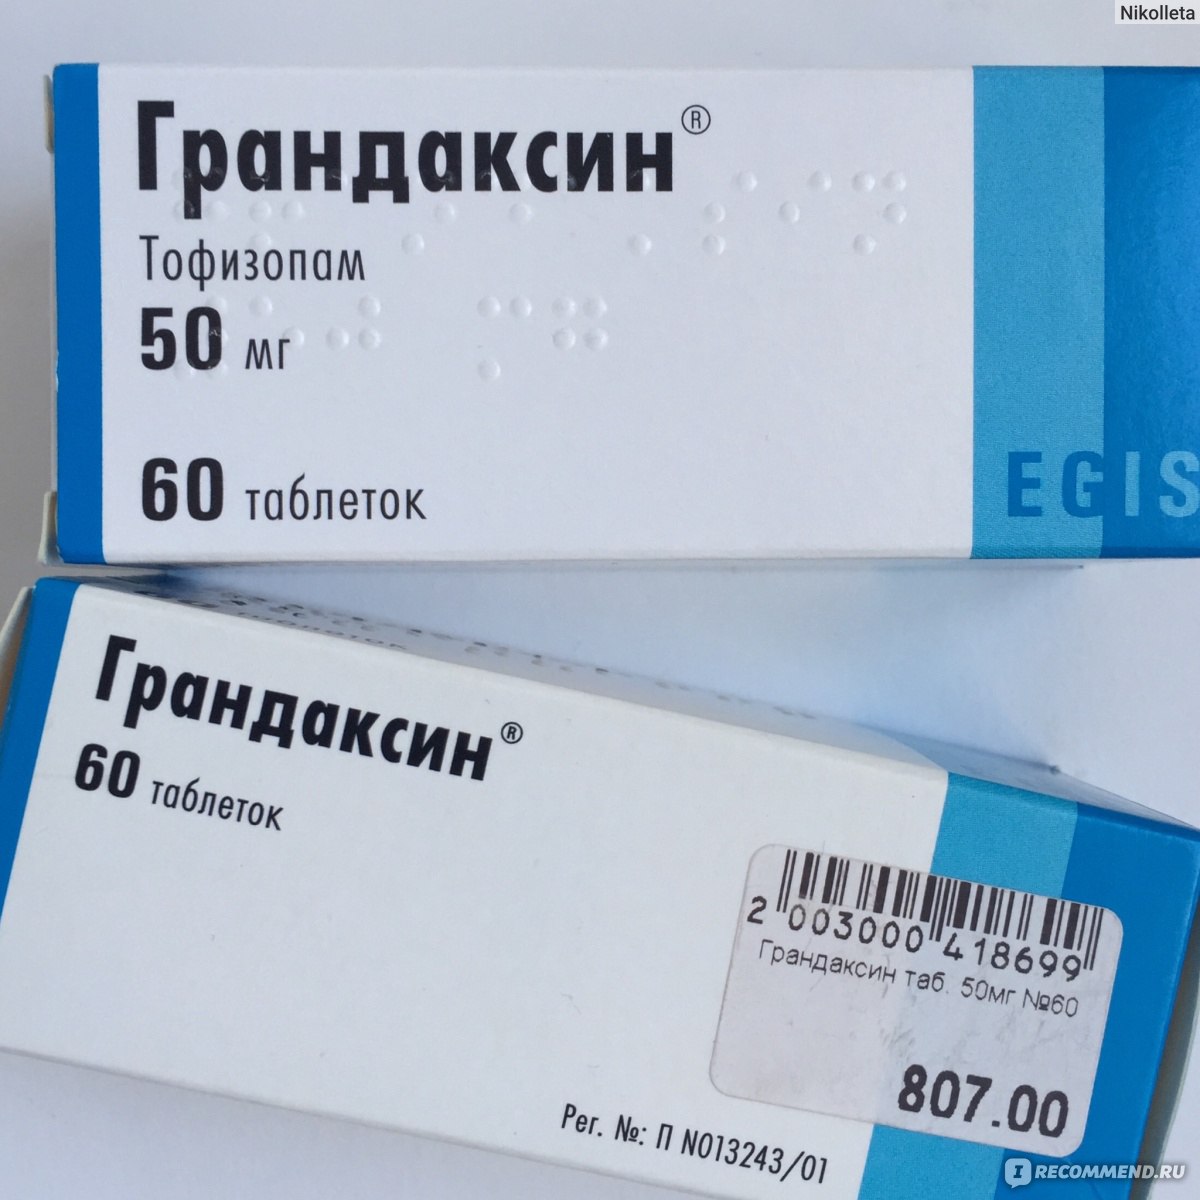 Грандаксин группа препаратов. Грандаксин (таб. 50мг n60 Вн ) Egis-Венгрия. Грандаксин 50 мг. Грандаксин таб 50мг 20. Грандаксин Тофизопам 50 мг.